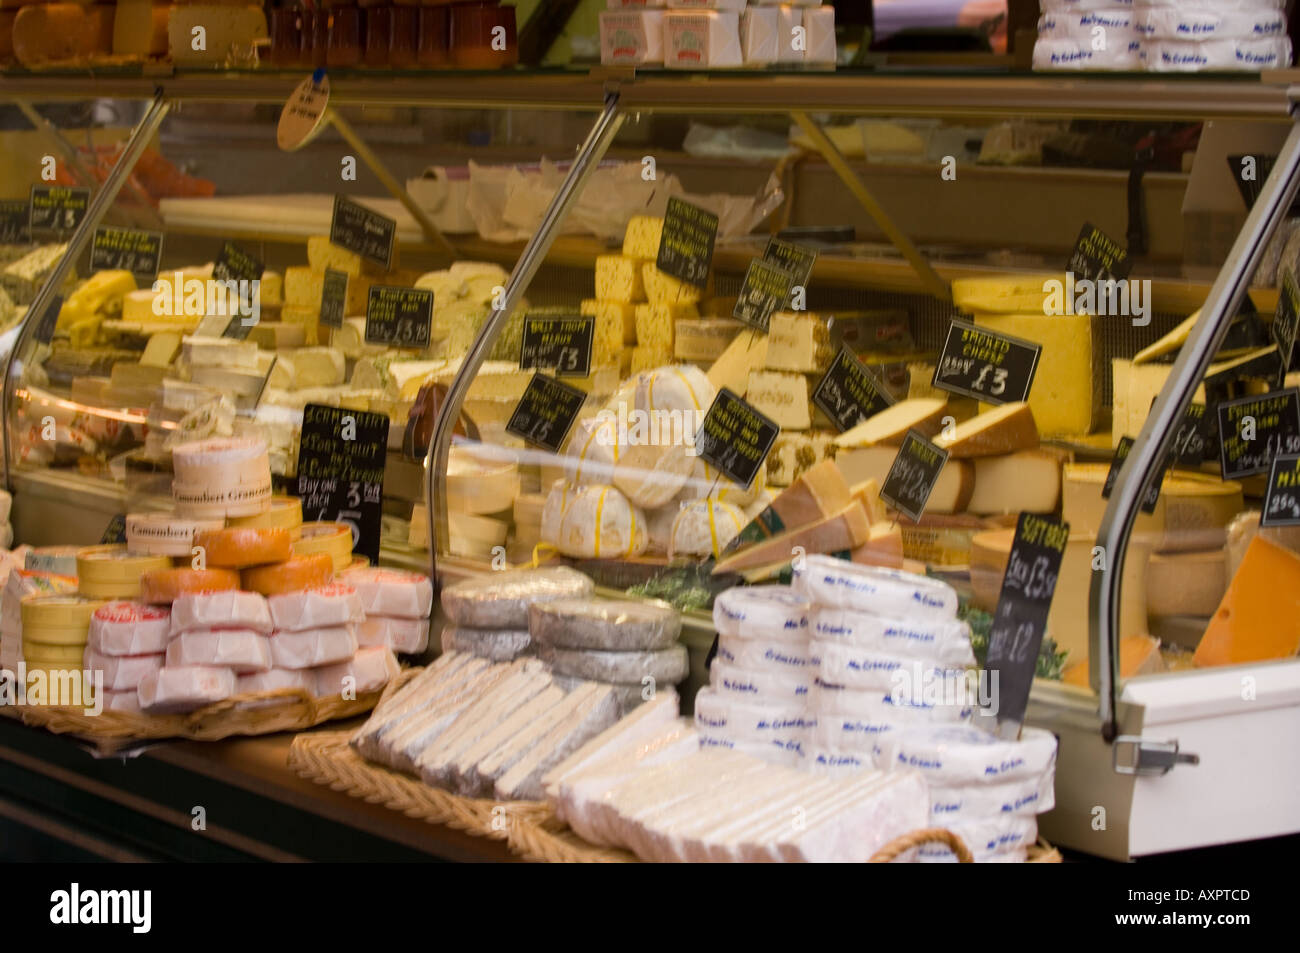 Cheese counter in deli shop Stock Photo